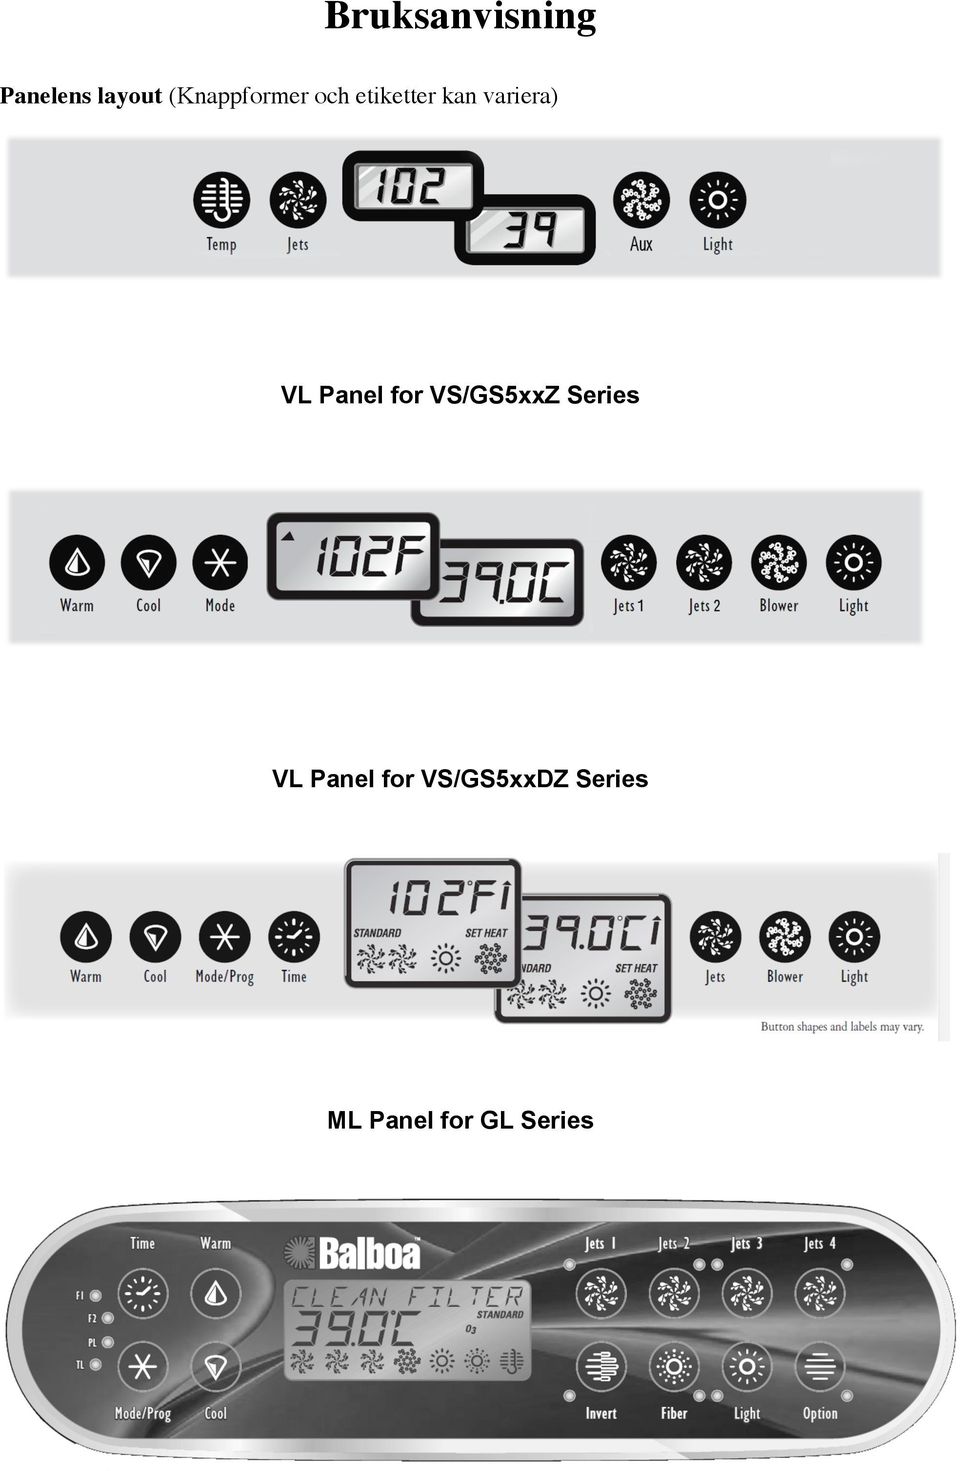 VS/GS5xxZ Series VL Panel for VS/GS5xxSZ